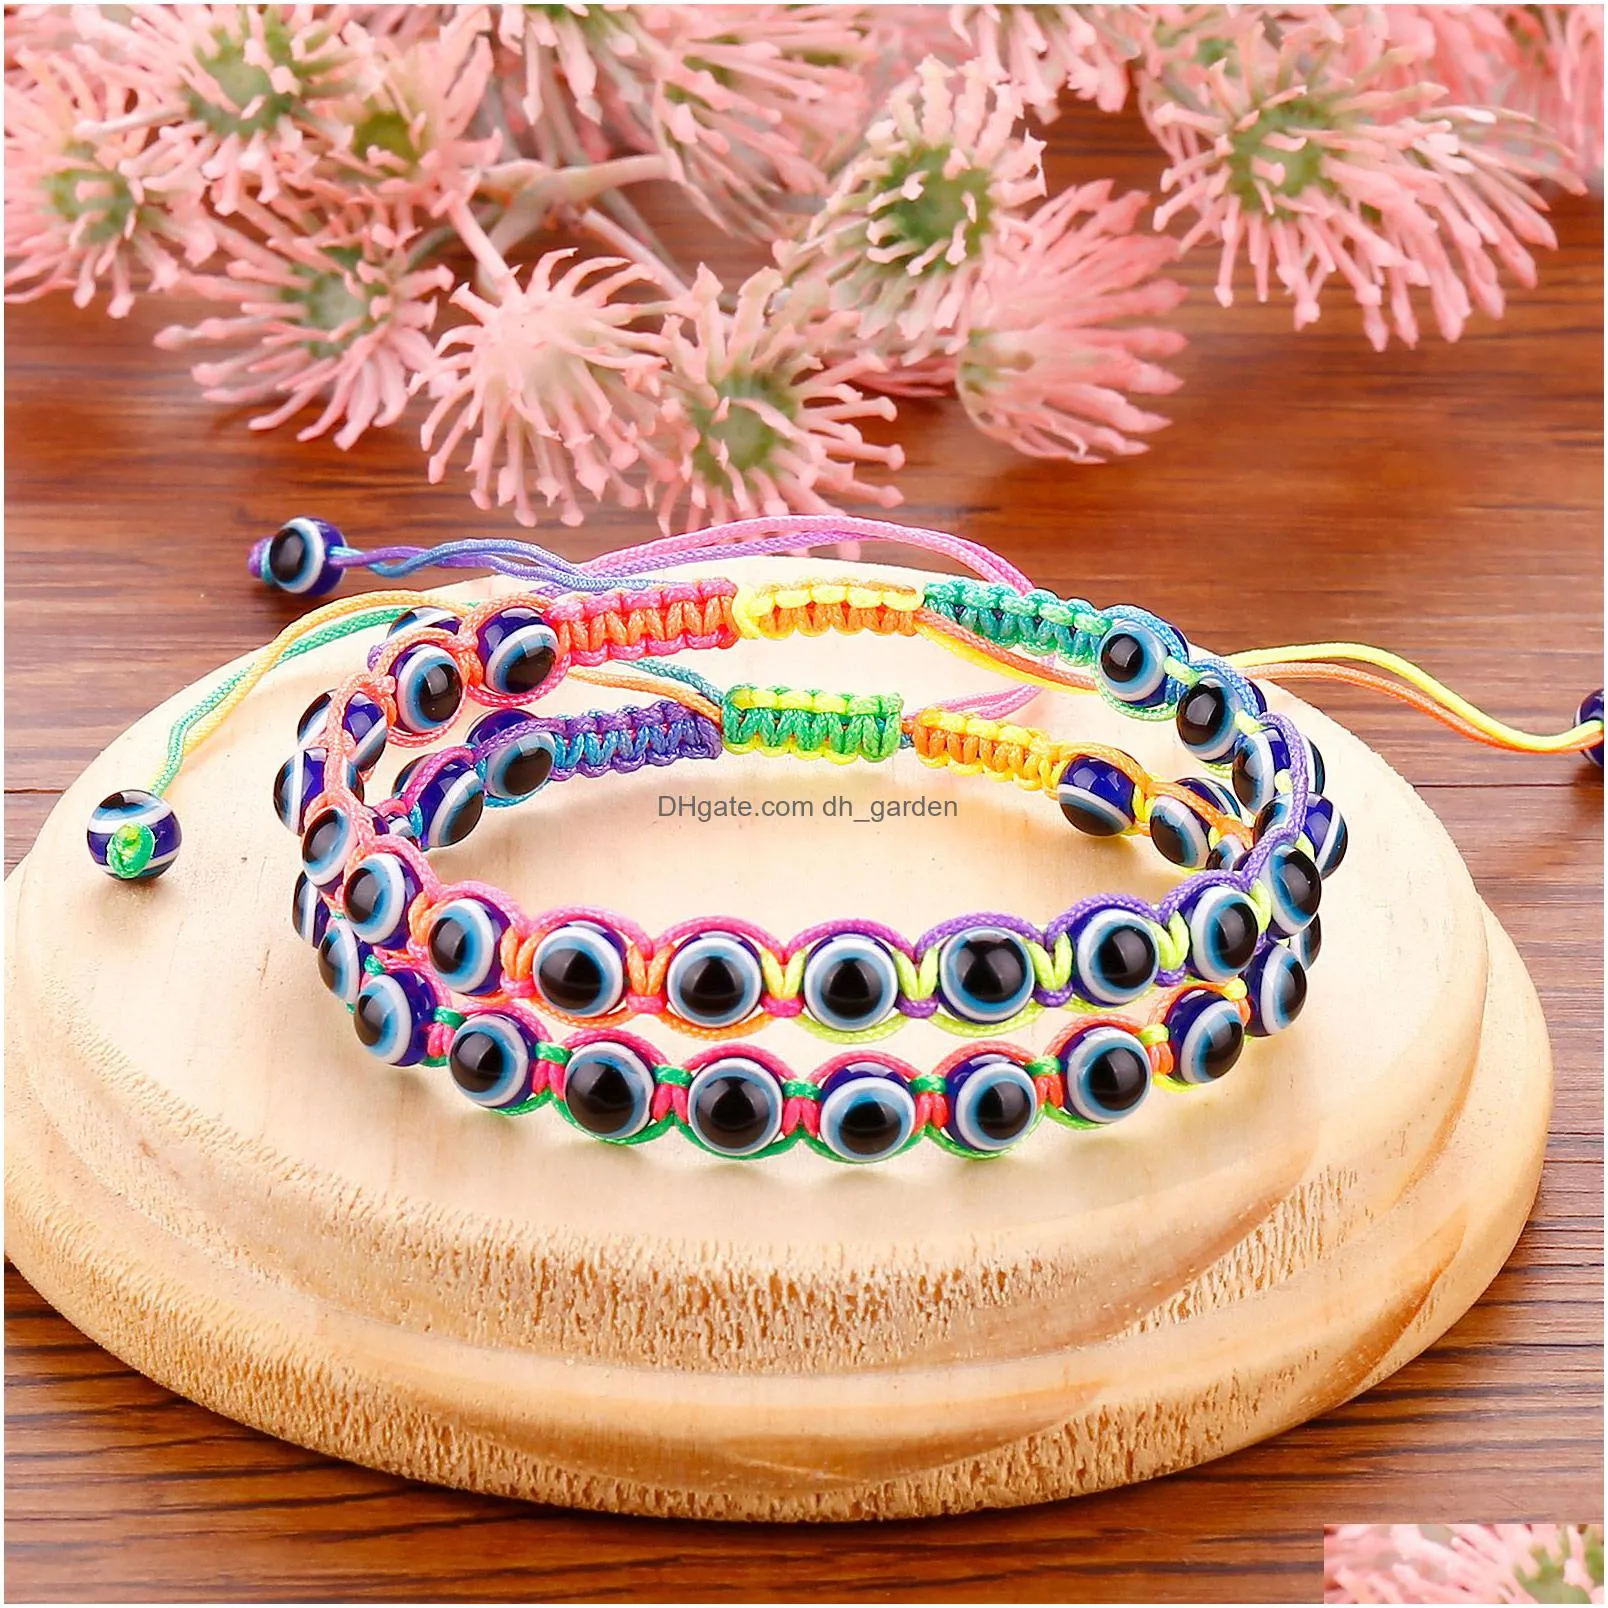 handmade turkish lucky evil blue eye chain bracelets for women men blue eyes braided red rope bracelet friendship jewelry